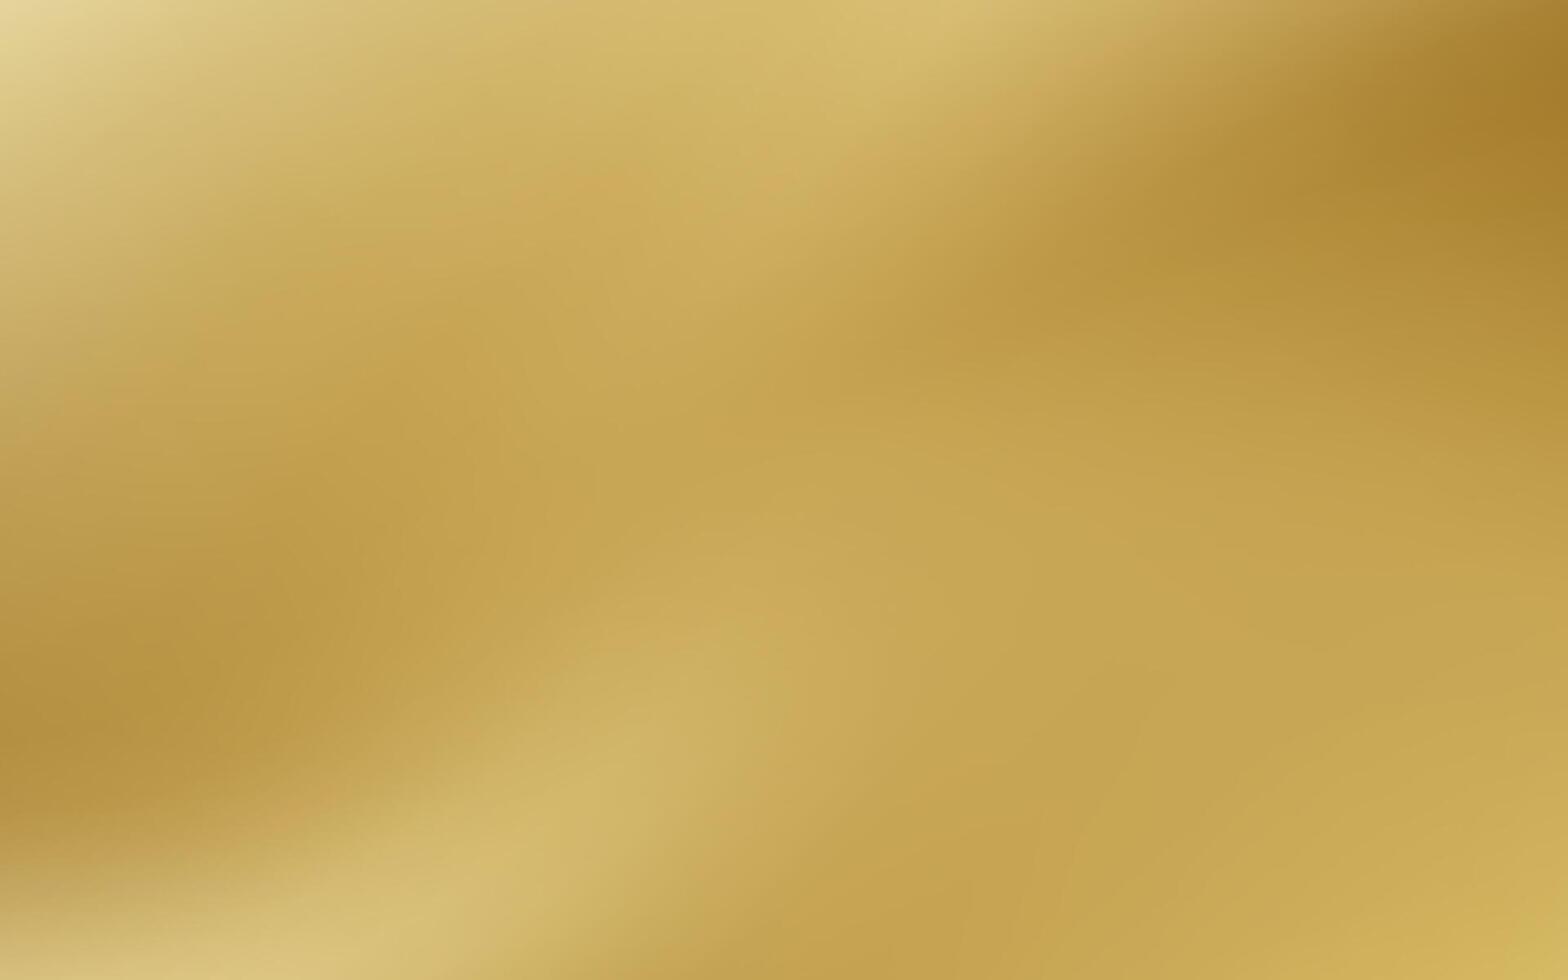 Dark Gold Background. Illustration vector